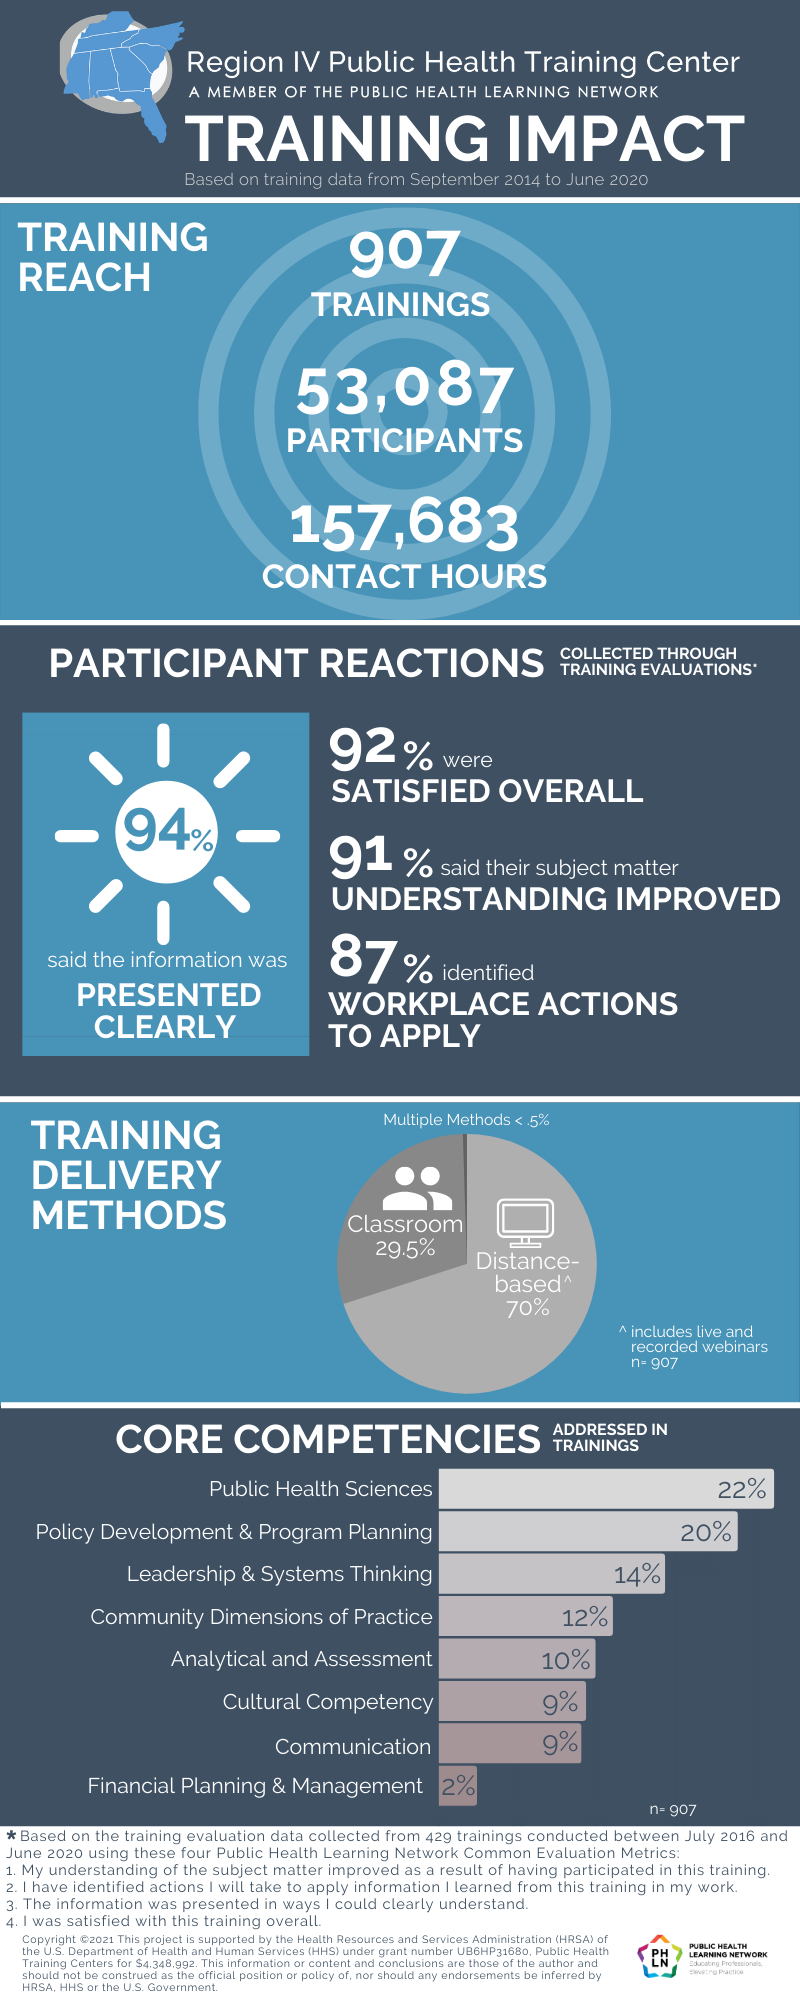 The Impact of the Region IV Public Health Training Center, 2014-2020